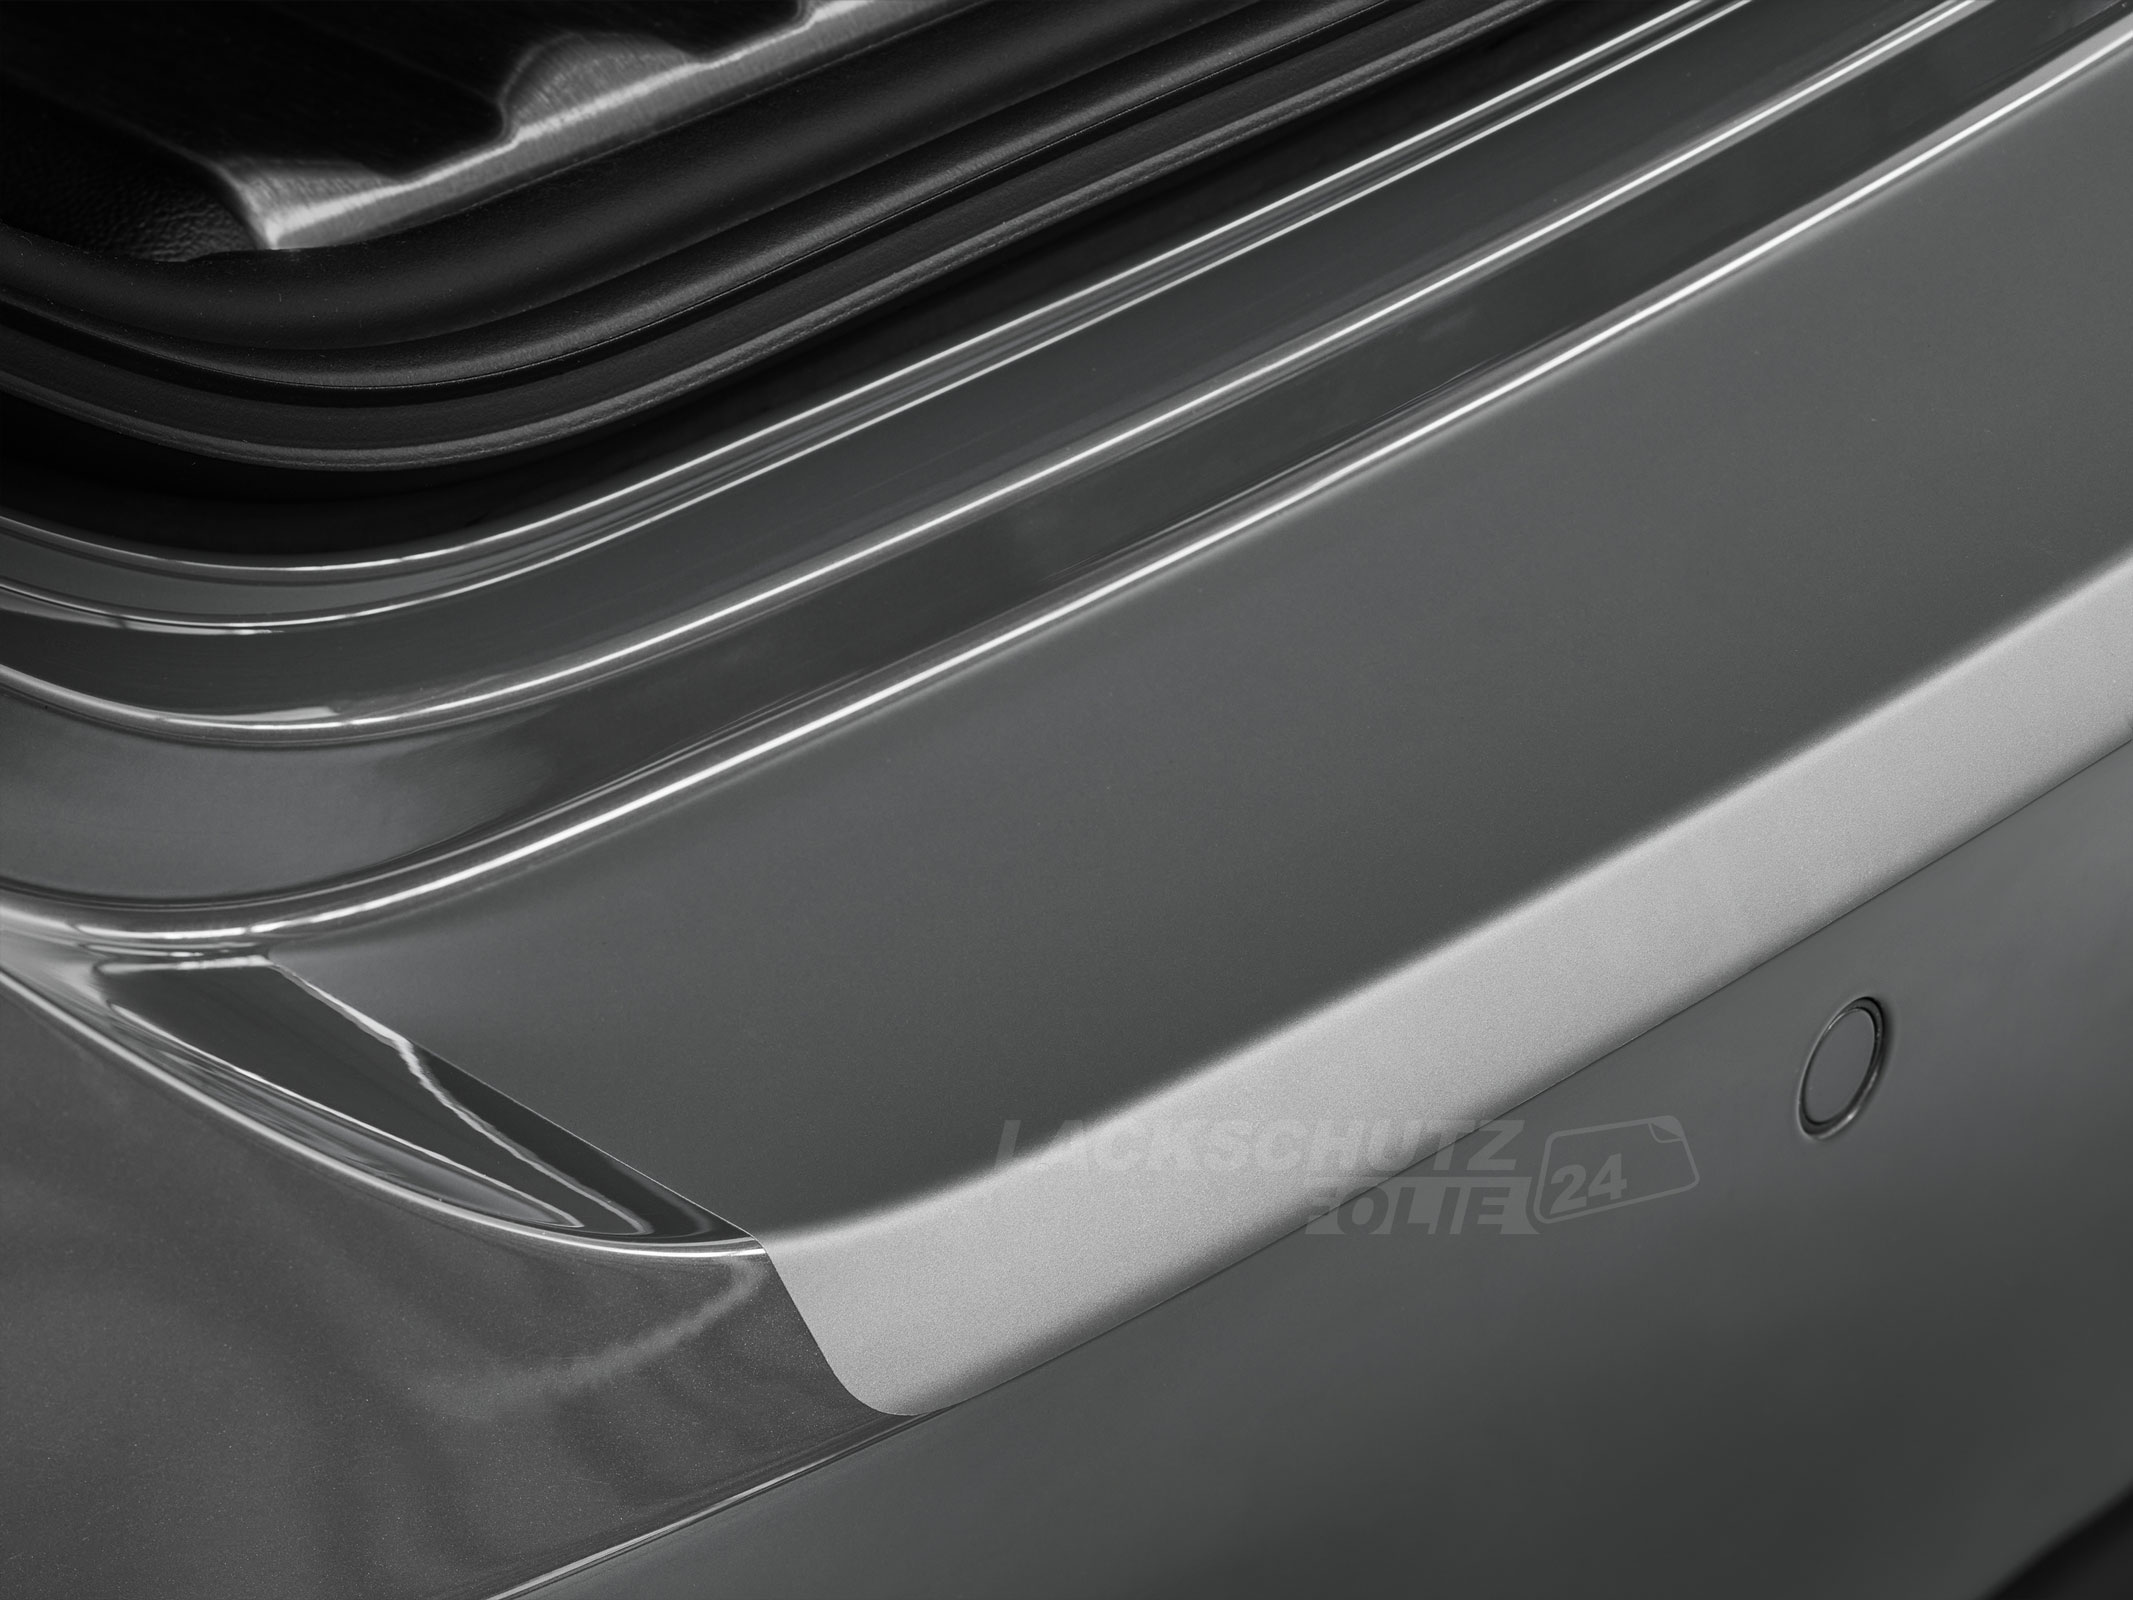 Ladekantenschutzfolie - Transparent Glatt MATT 110 µm stark  für BMW 5er Touring (Kombi) Typ F11, BJ 09/2010-05/2017